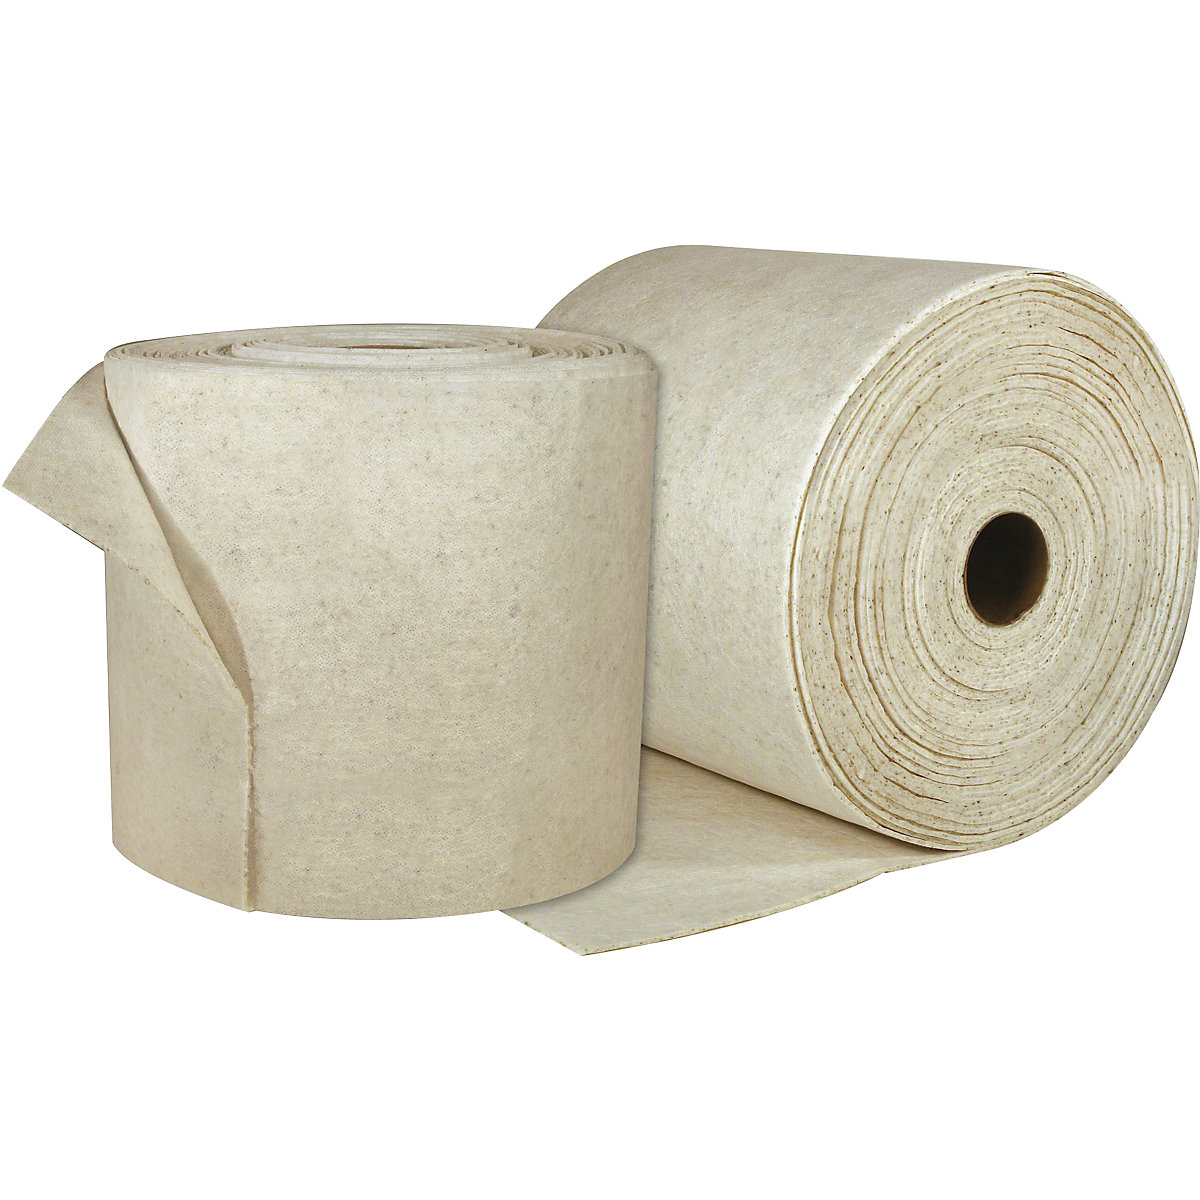 DuraSoak® absorbent sheeting for oil